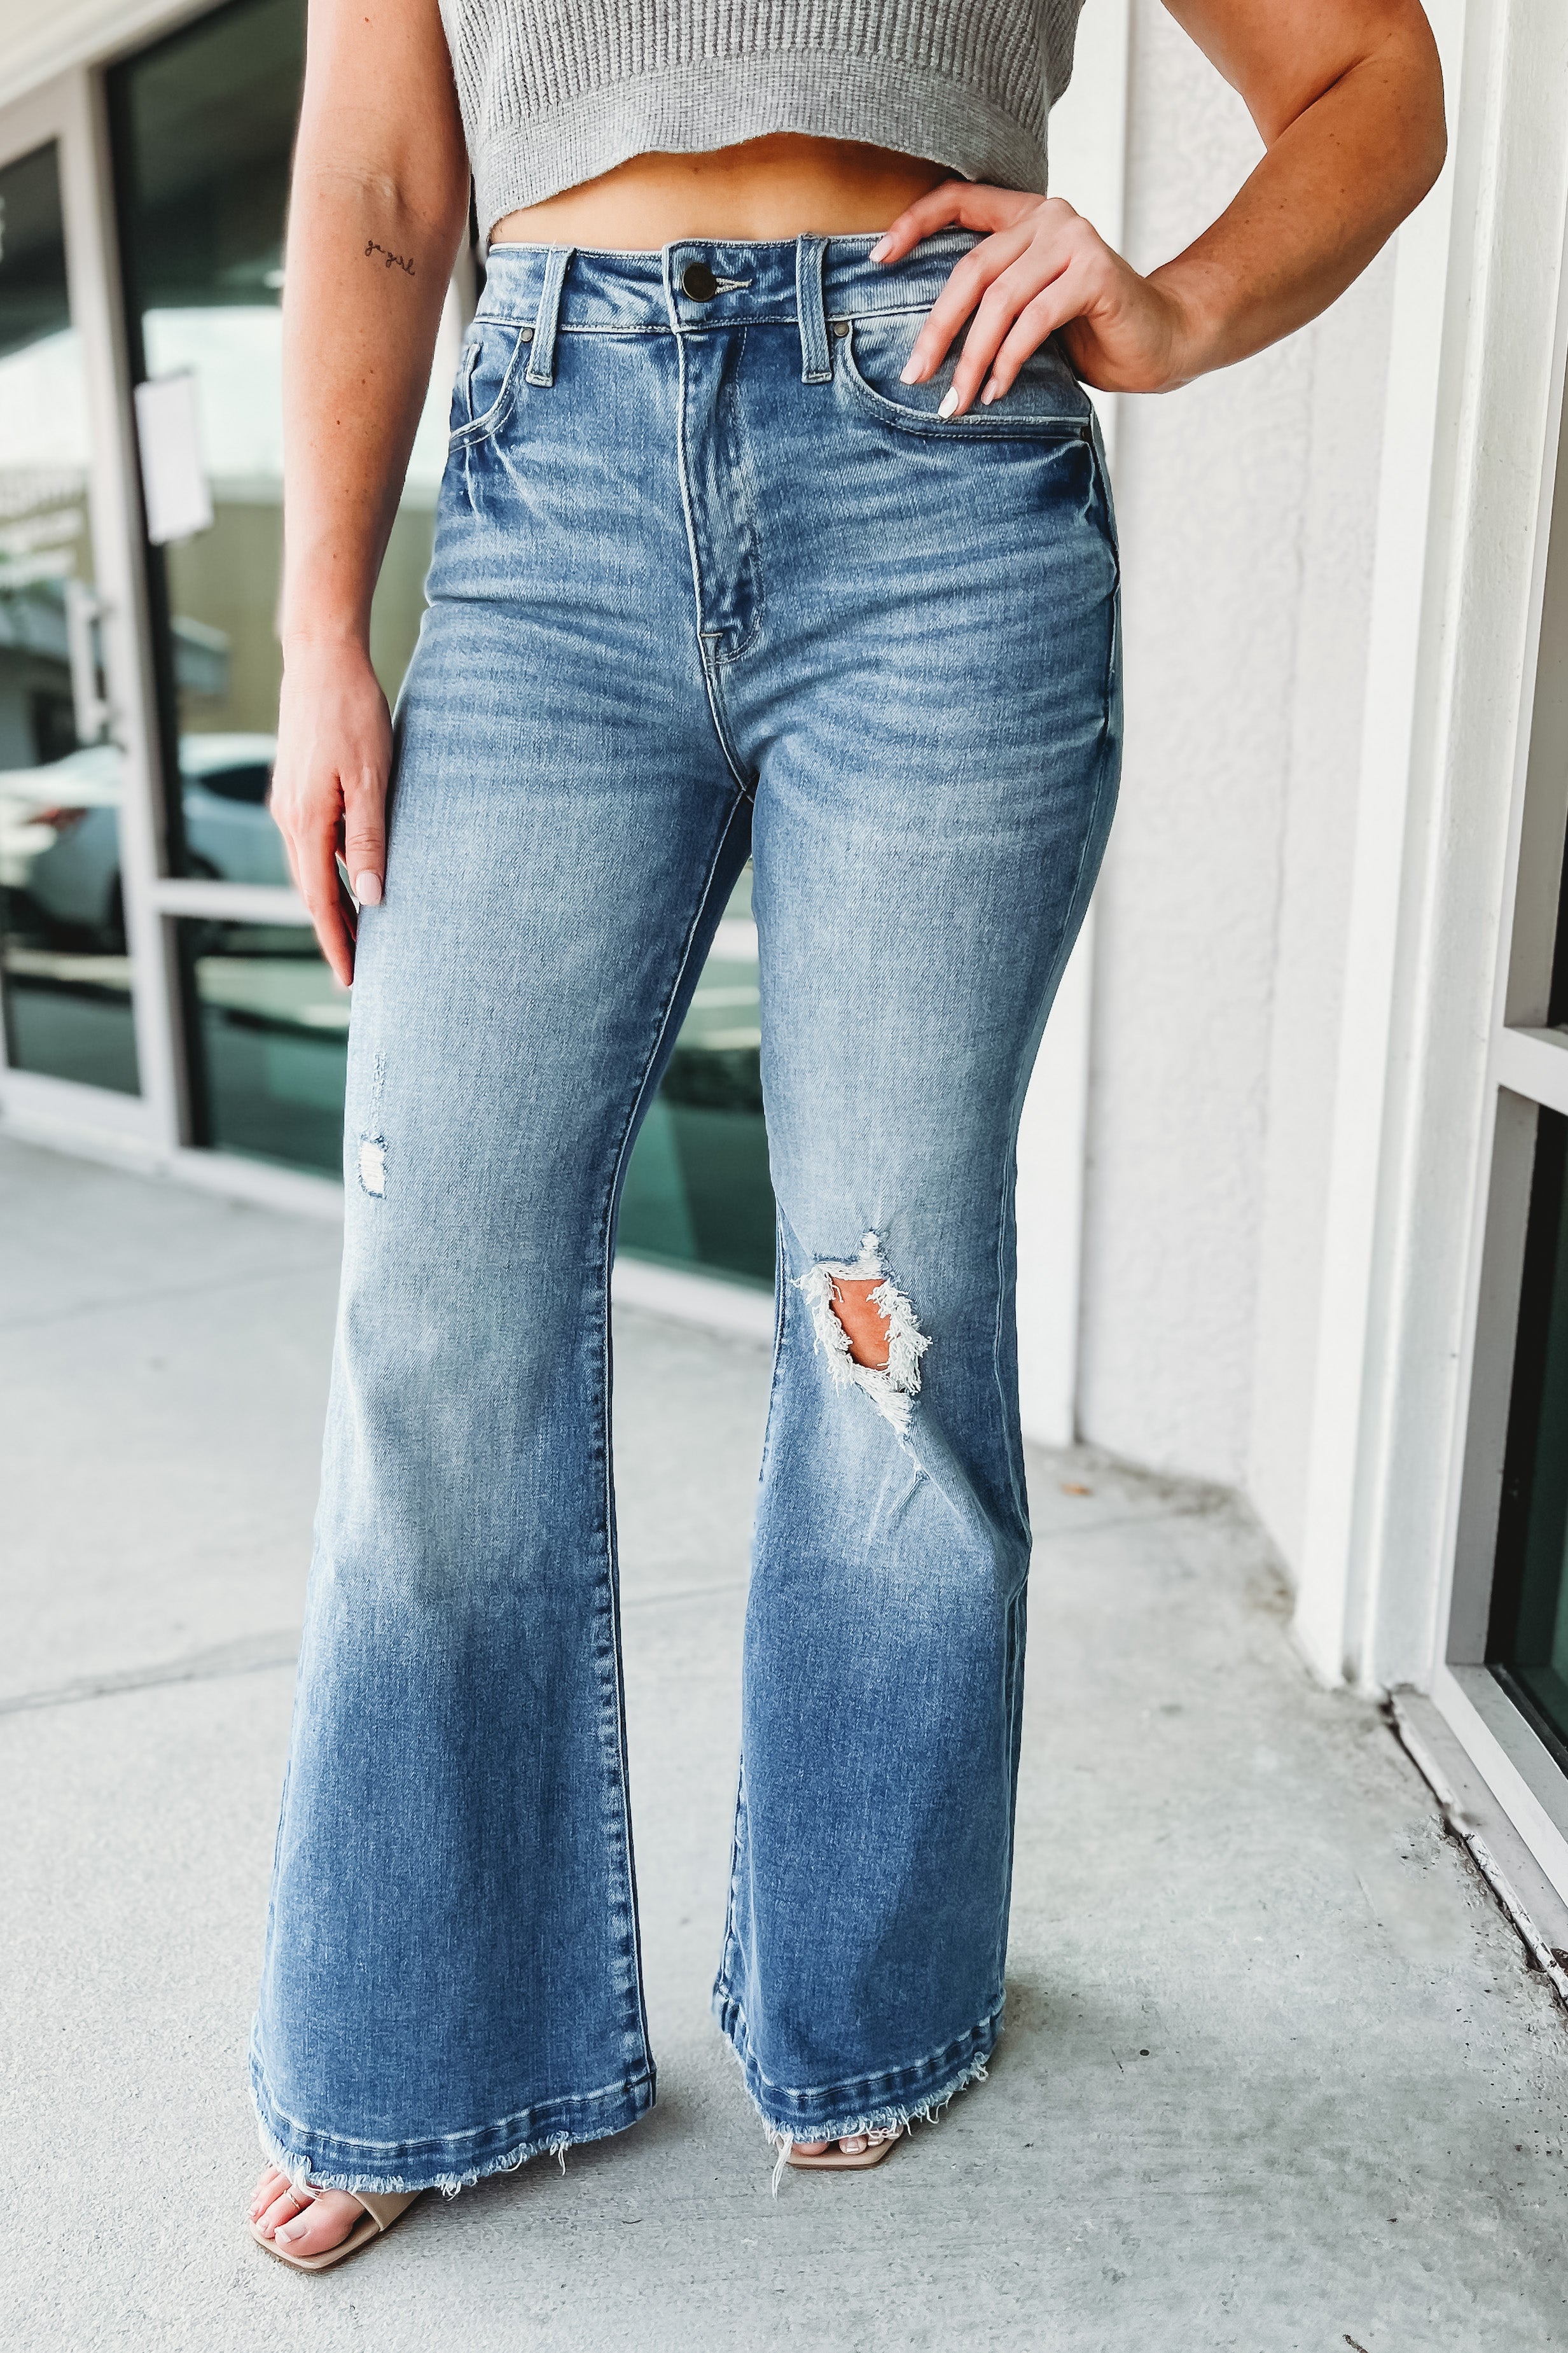 Womens Retro Denim Highwaist 2-Buttons Flare Style Jeans Pants for Women  #9236